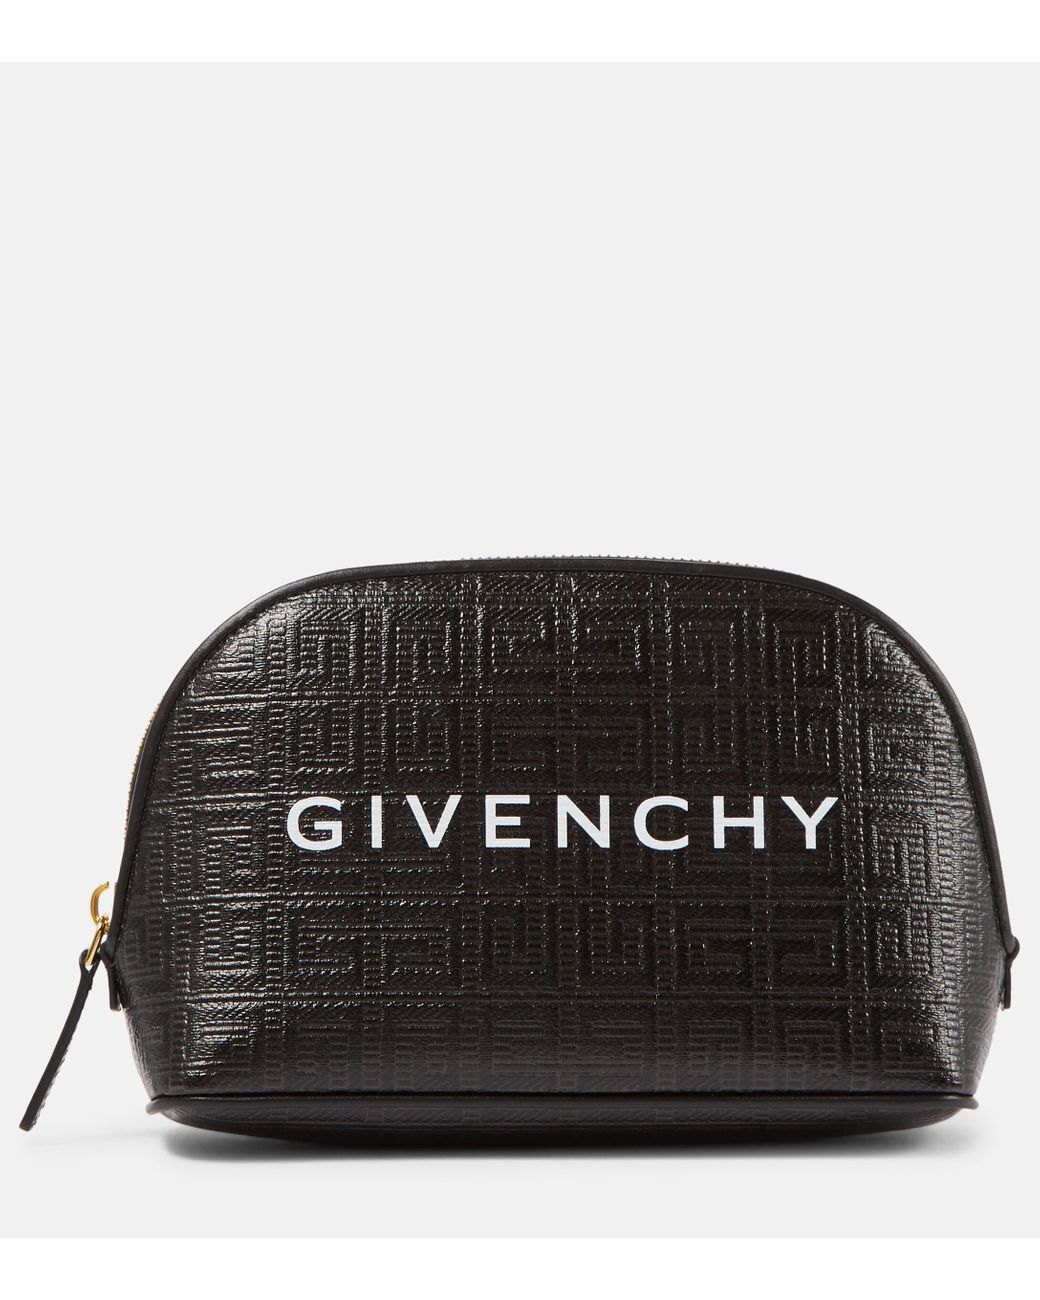 Givenchy G-essentials Canvas Cosmetics Case in Black | Lyst Australia